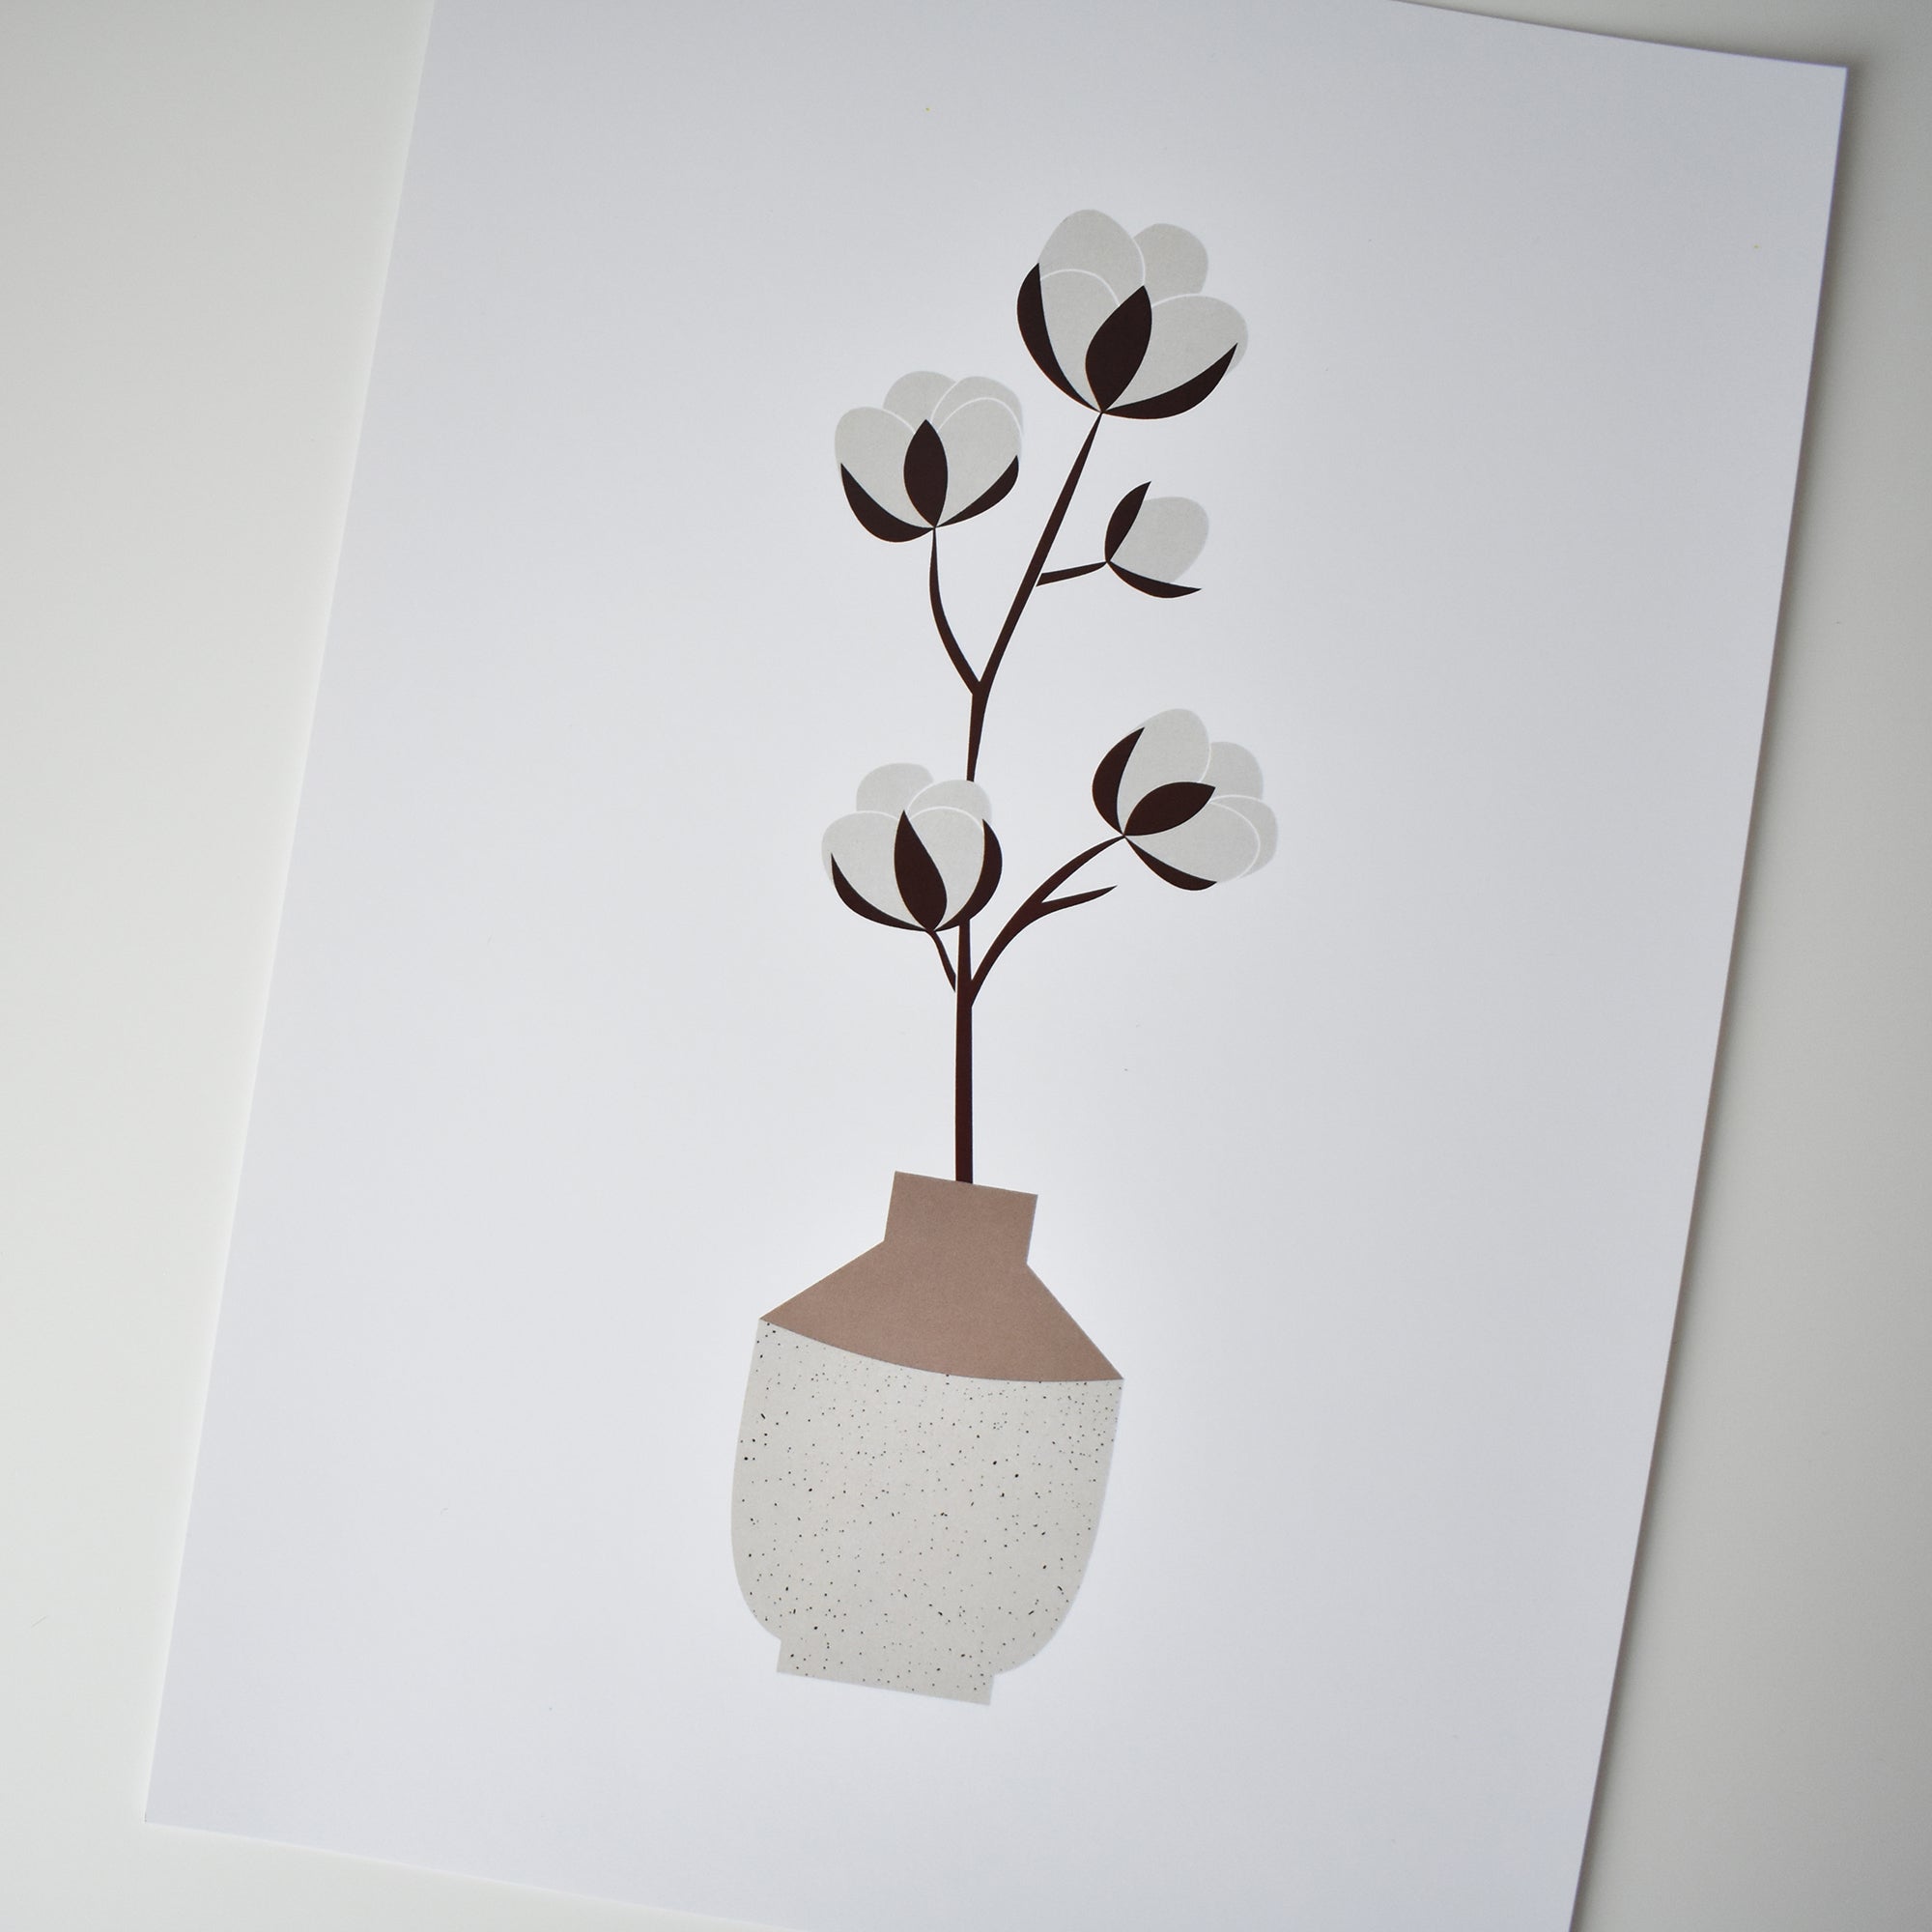 cotton flower in vase artwork poster Elemente Design 